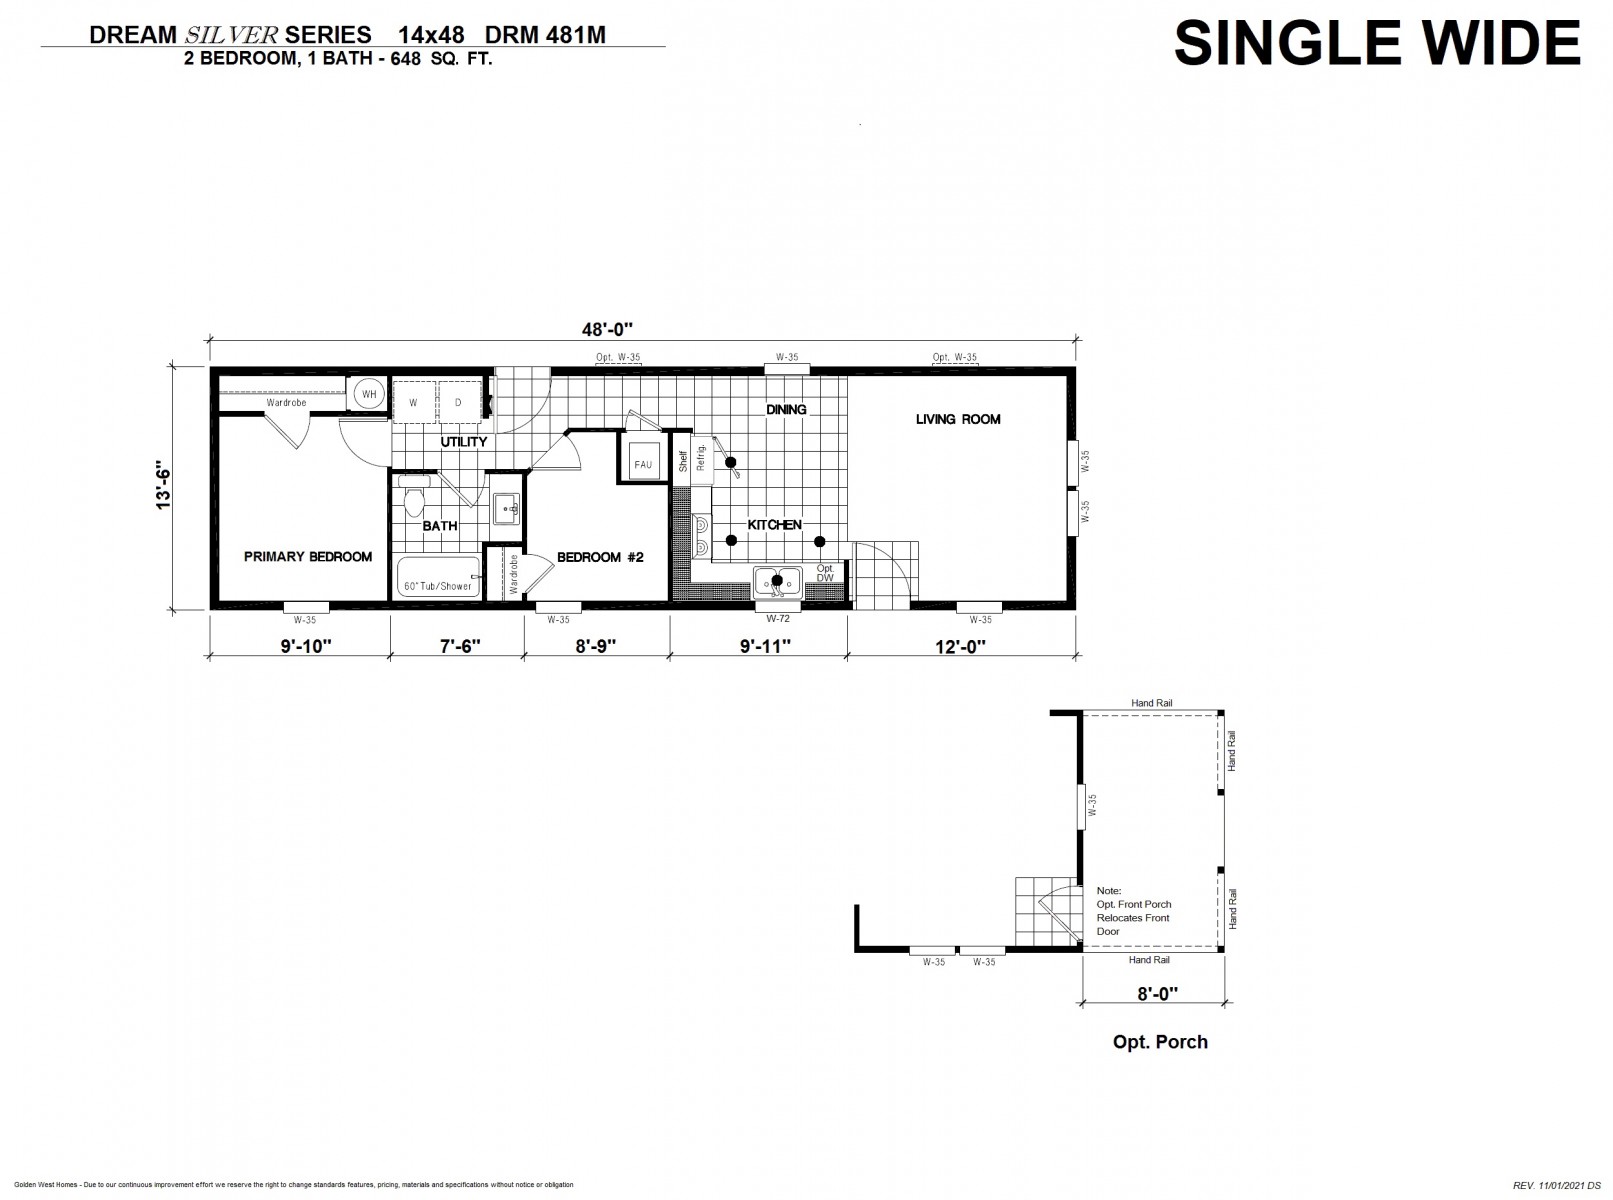 Homes Direct Modular Homes - Model DRM481M - Floorplan